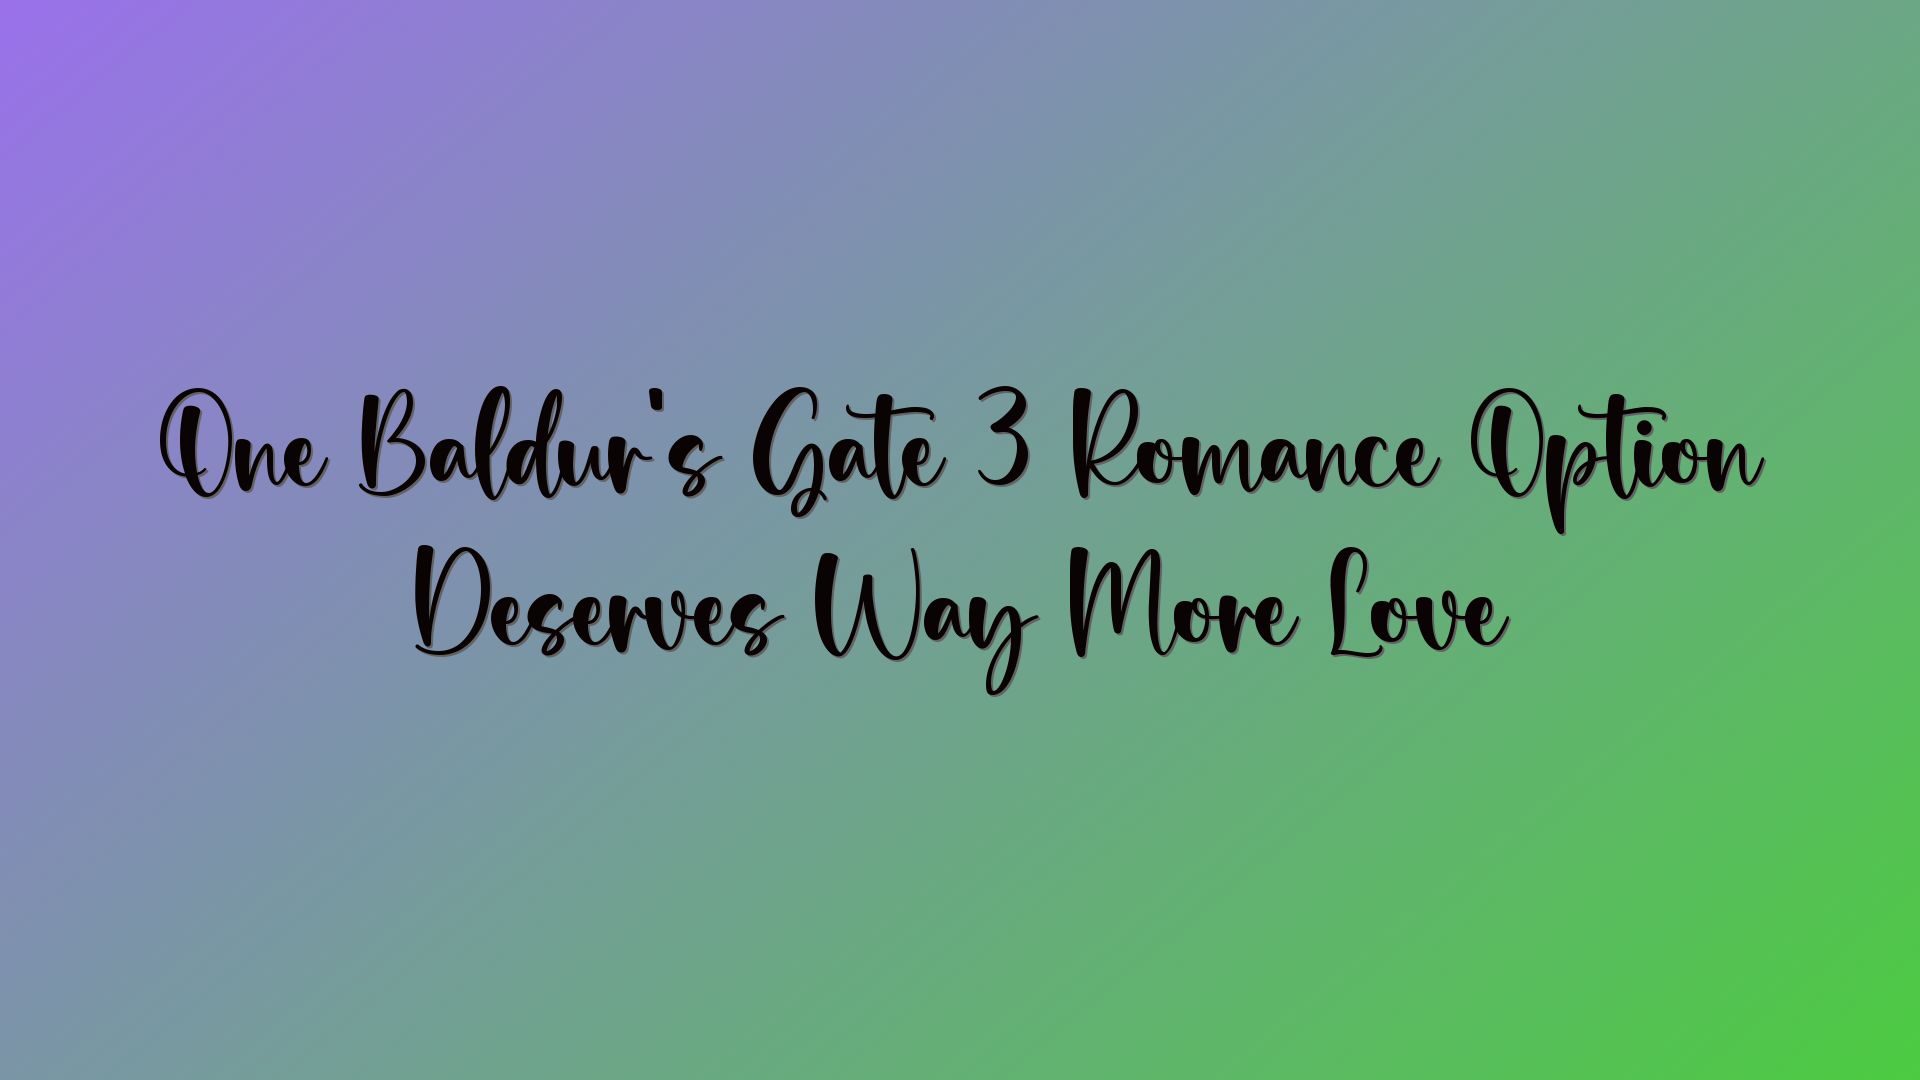 One Baldur’s Gate 3 Romance Option Deserves Way More Love